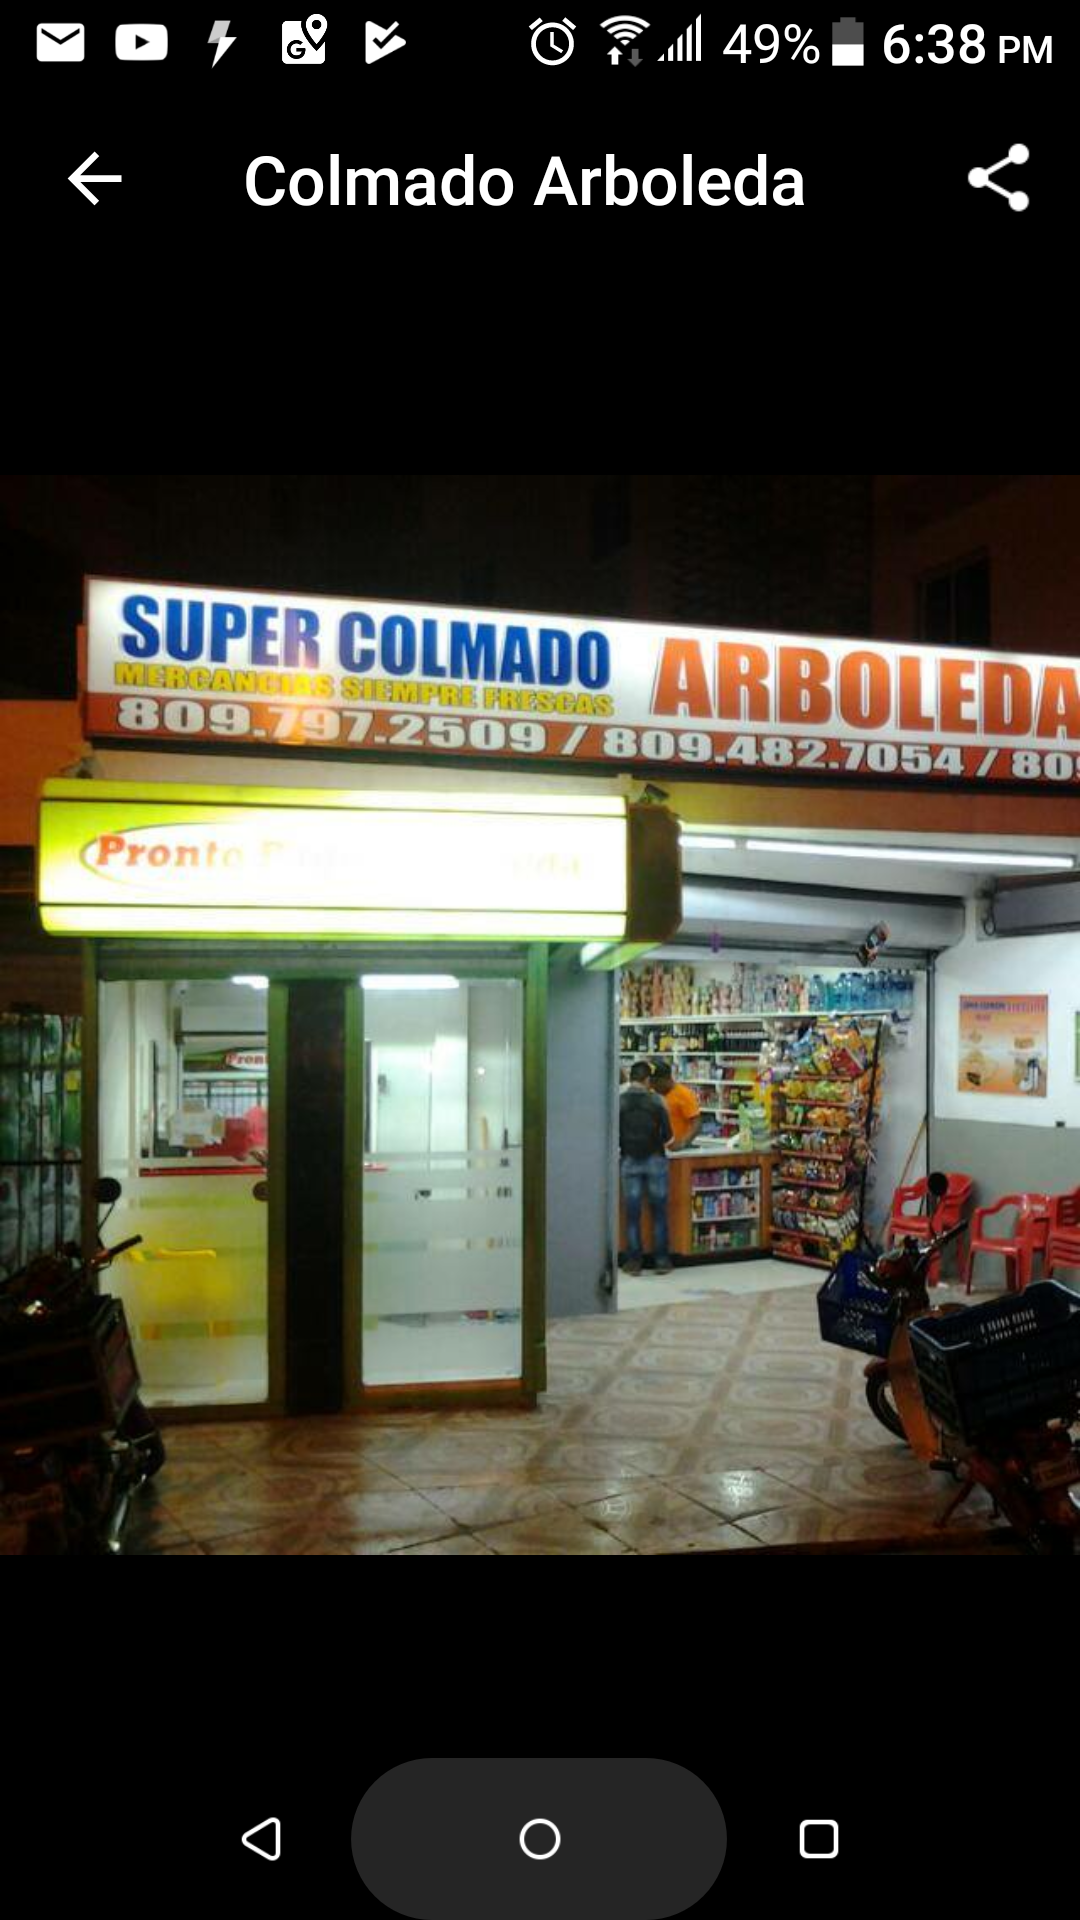 Super Colmado Arboleda